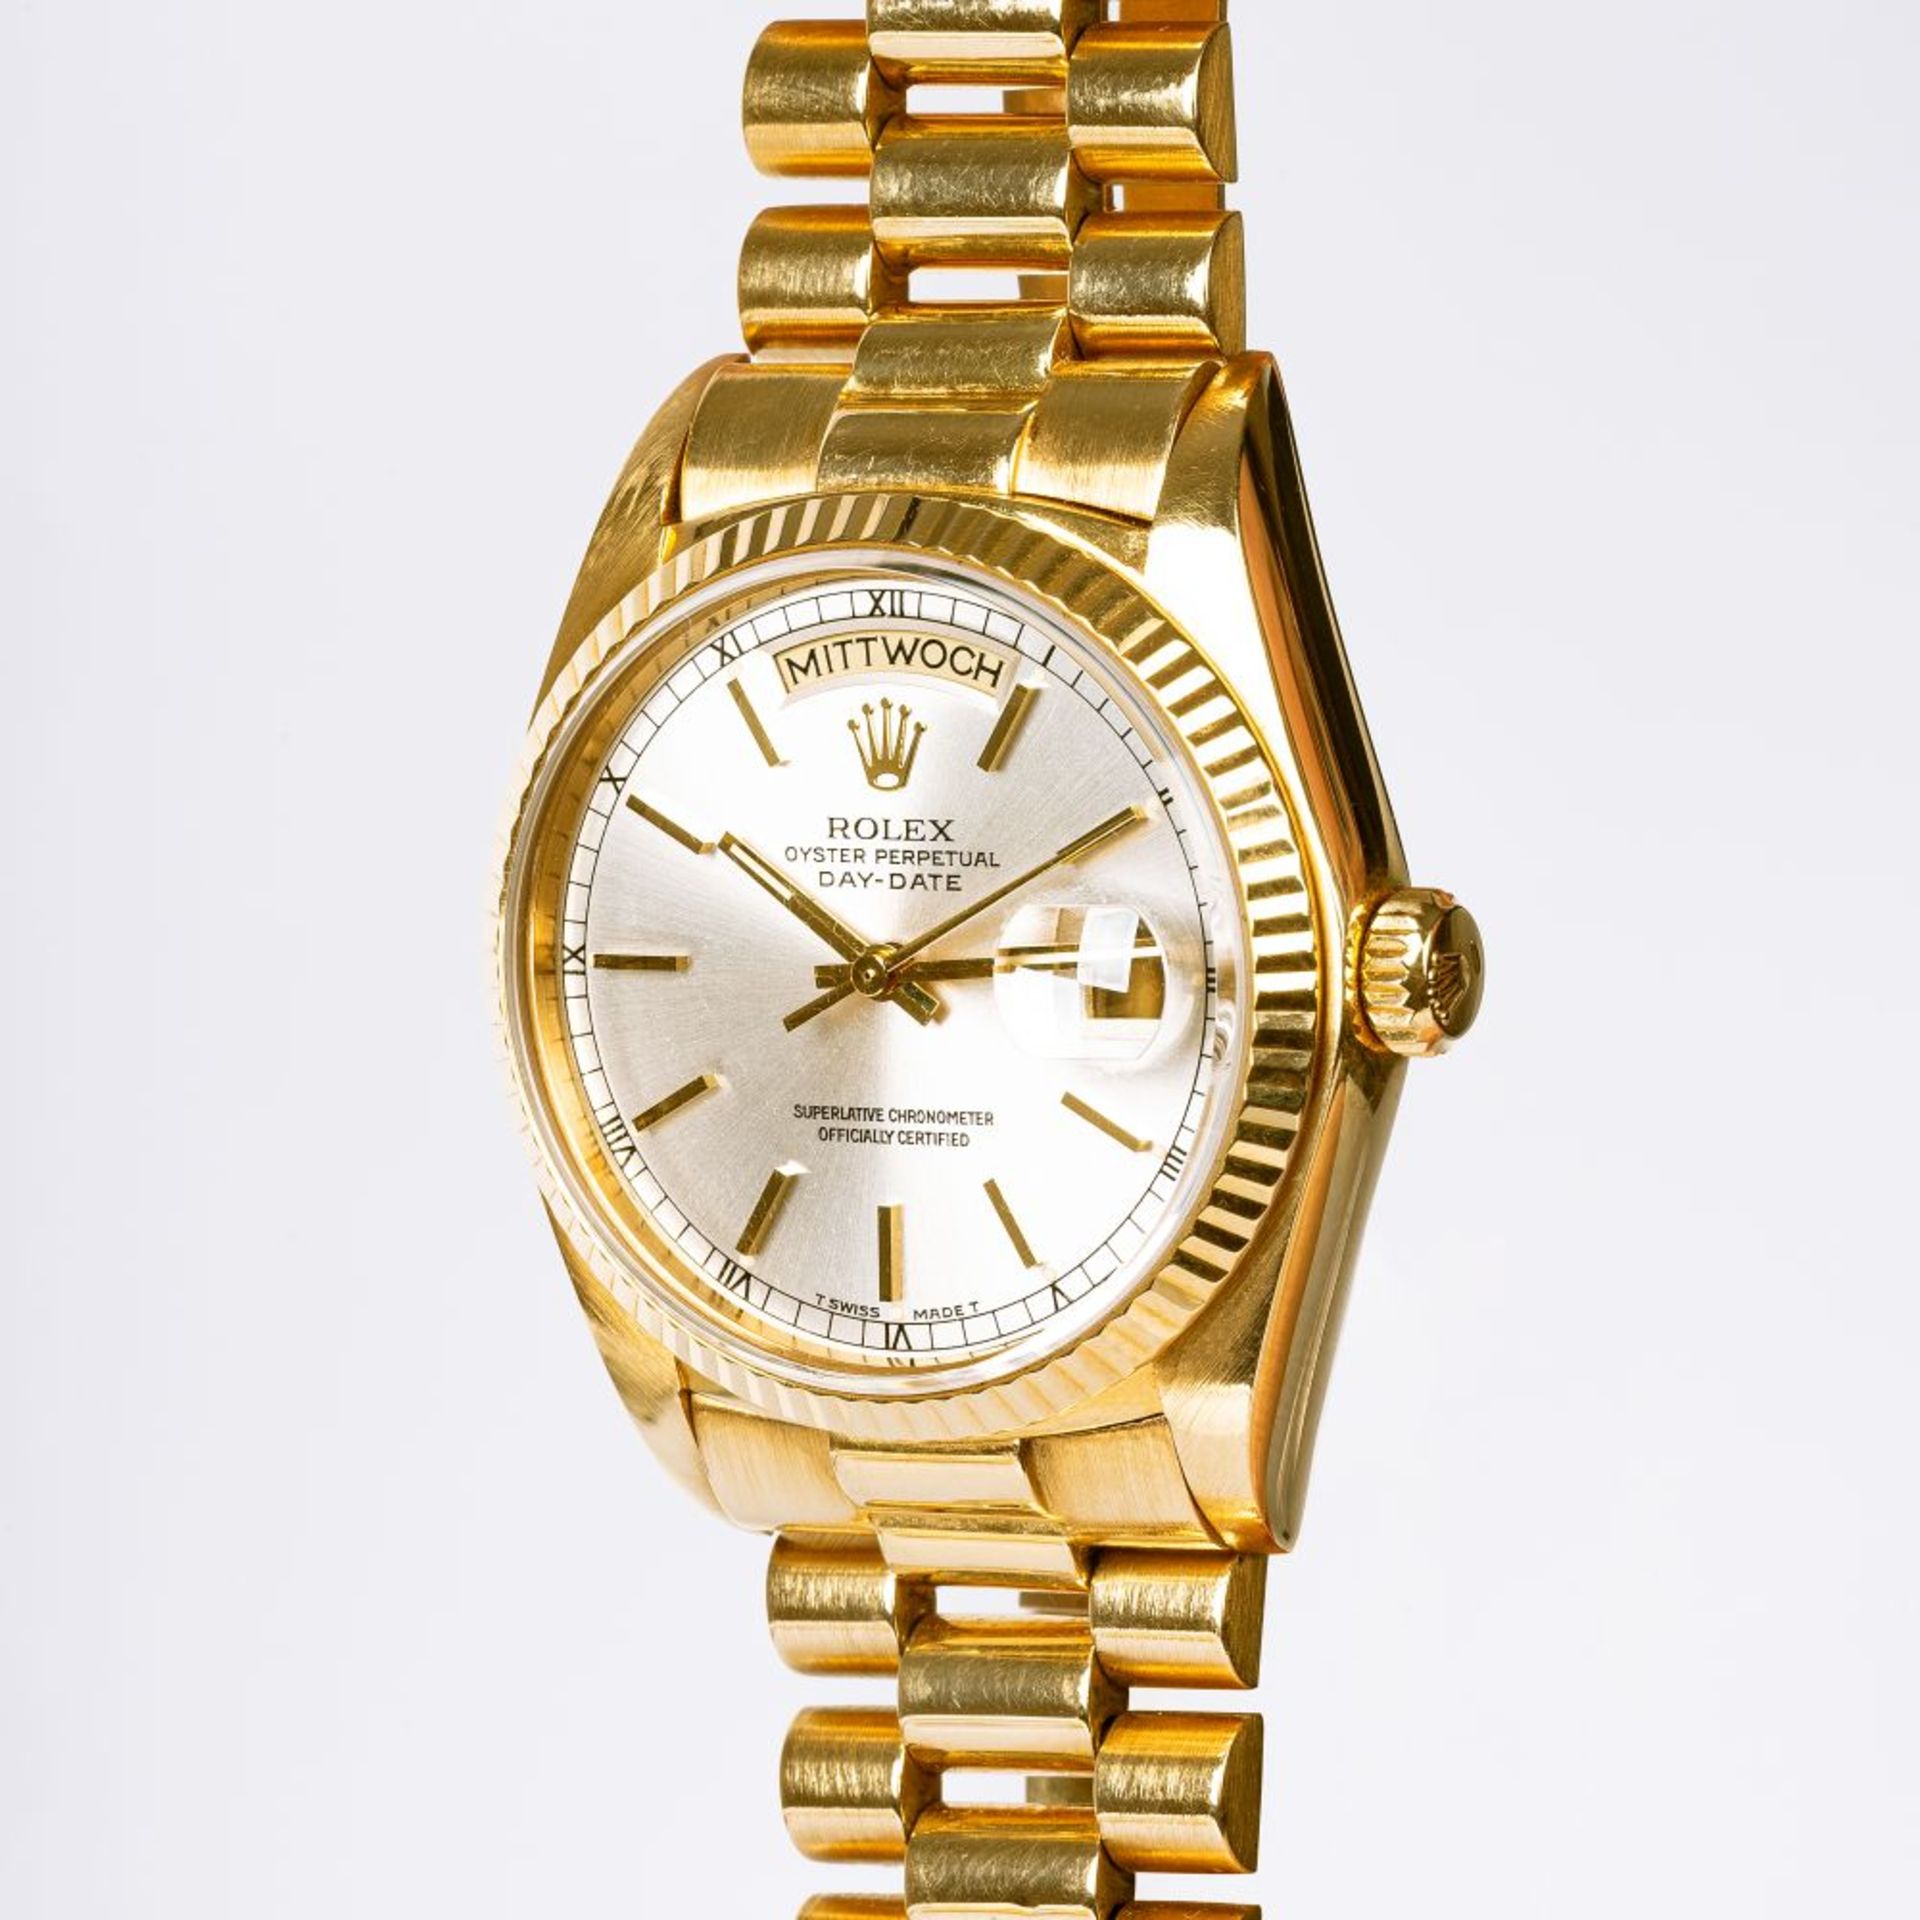 Rolex. A Gentleman's Wristwatch Day-Date. - Image 2 of 7